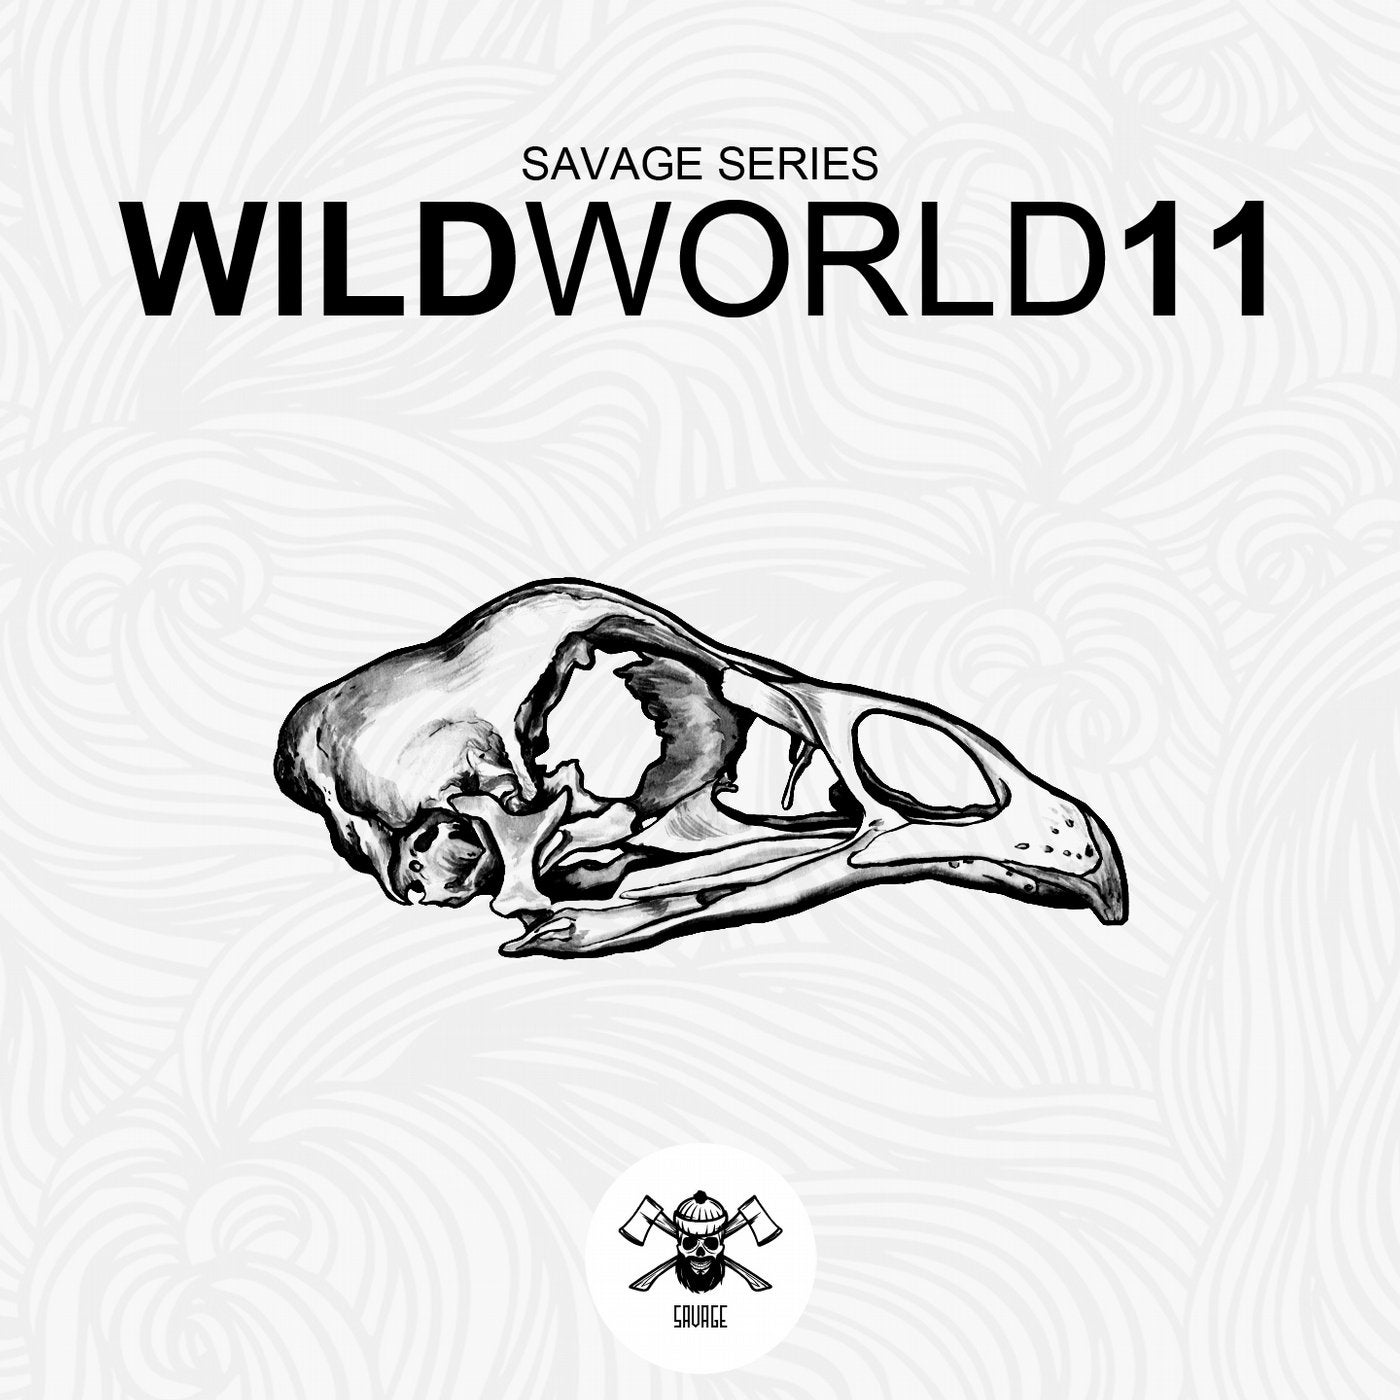 WildWorld11 (Savage Series)